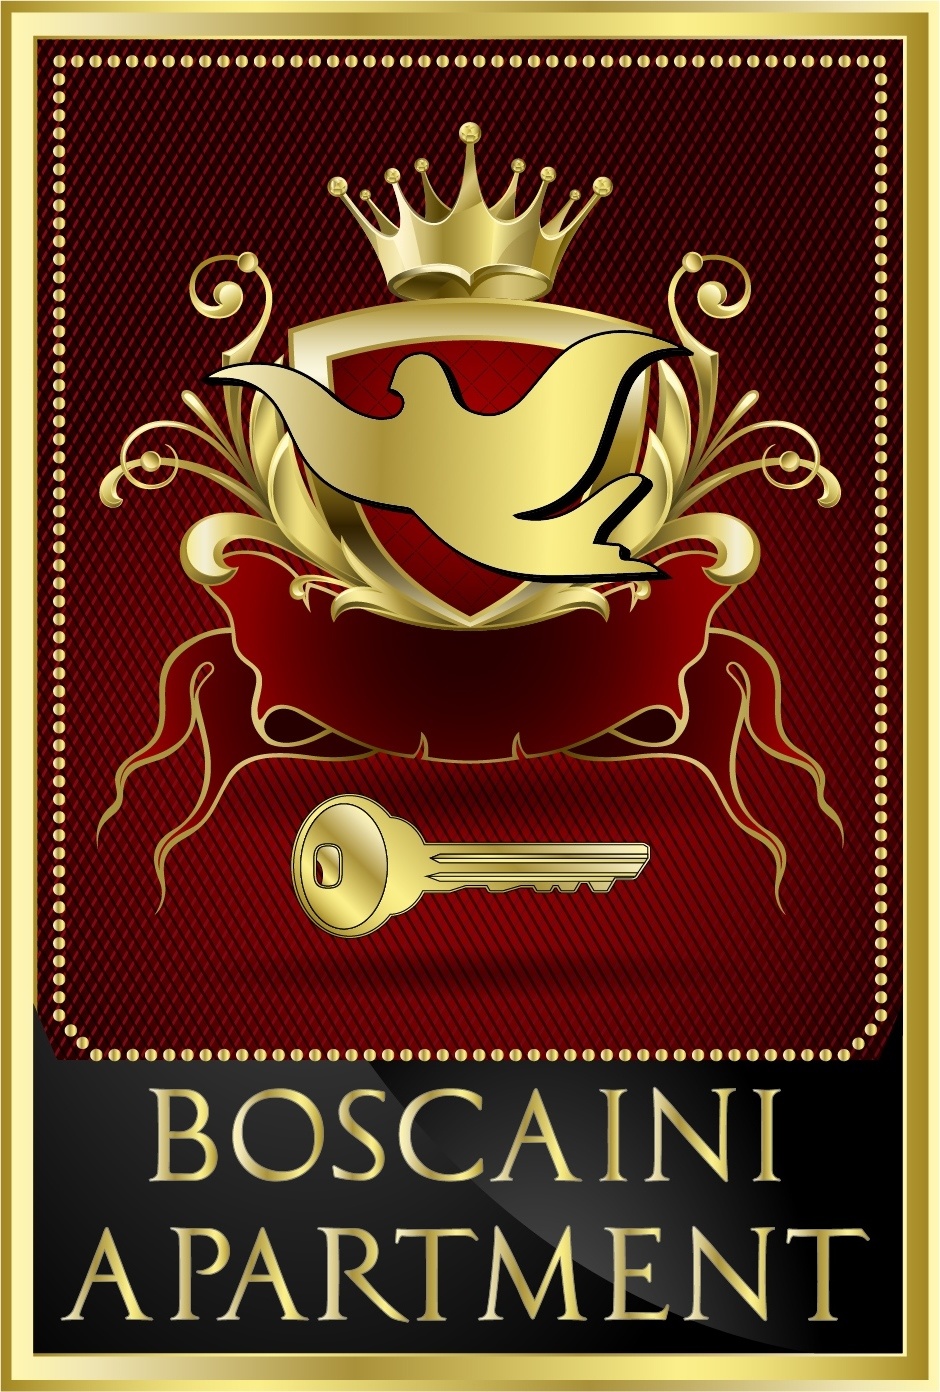 Boscaini Apartment